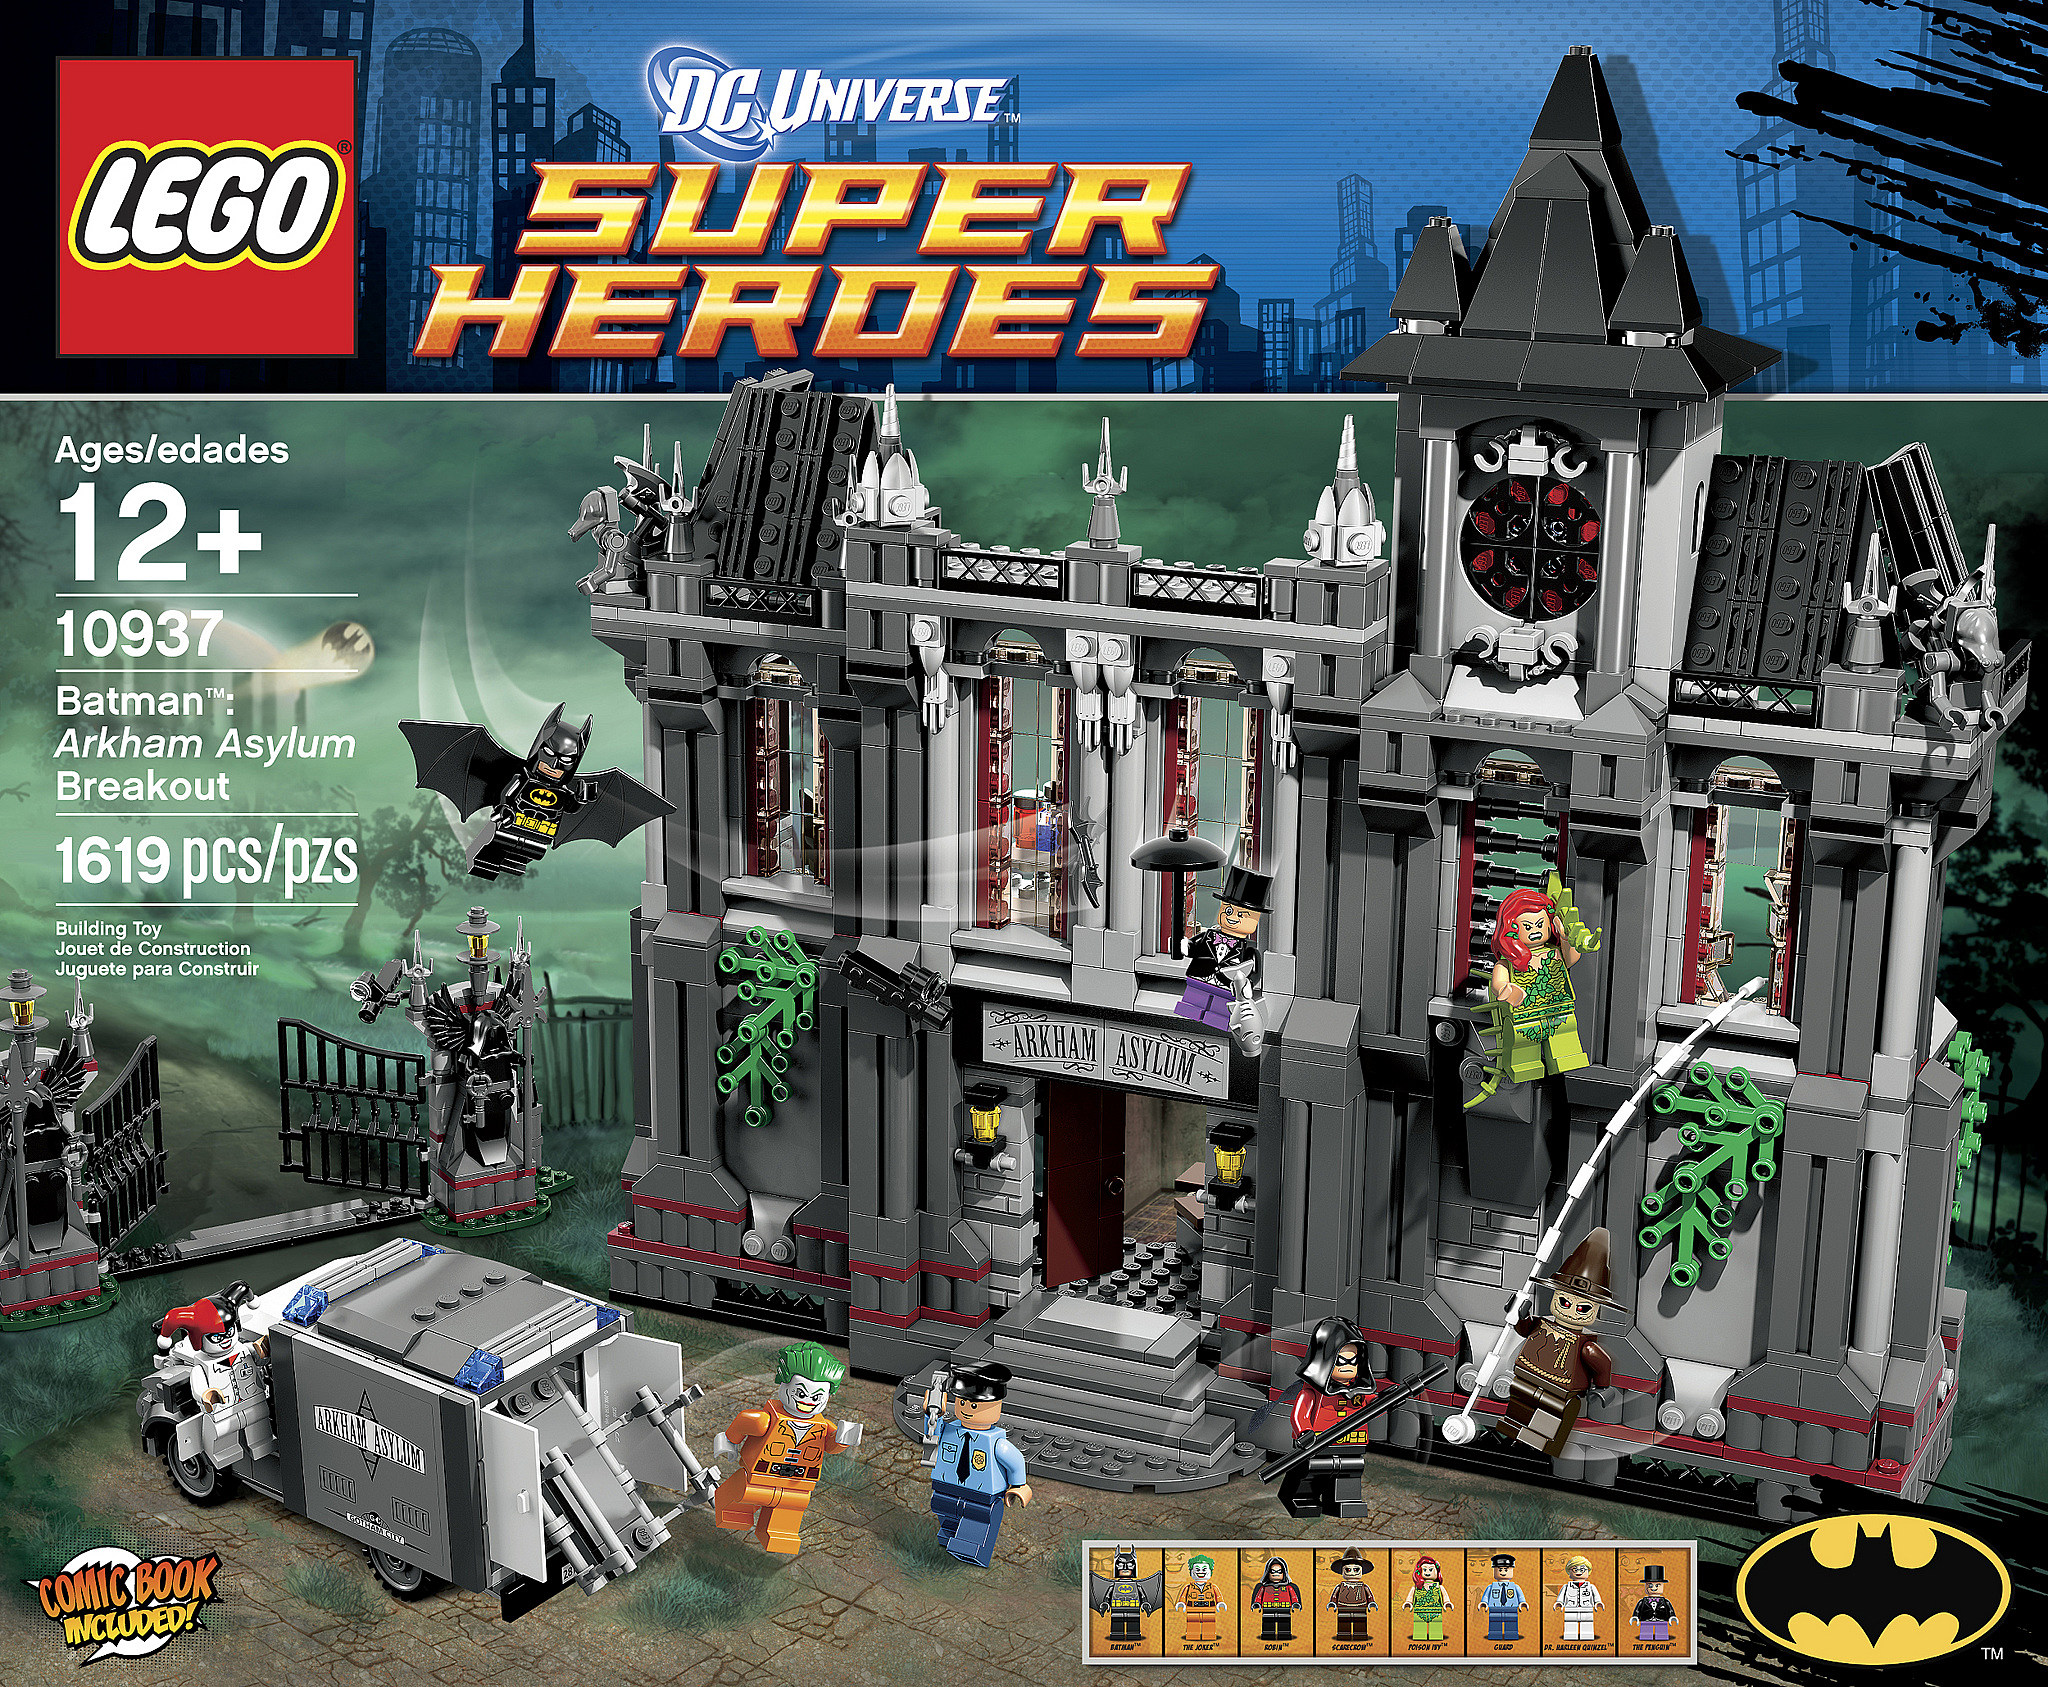 Massive New Lego Arkham Asylum Set Announced